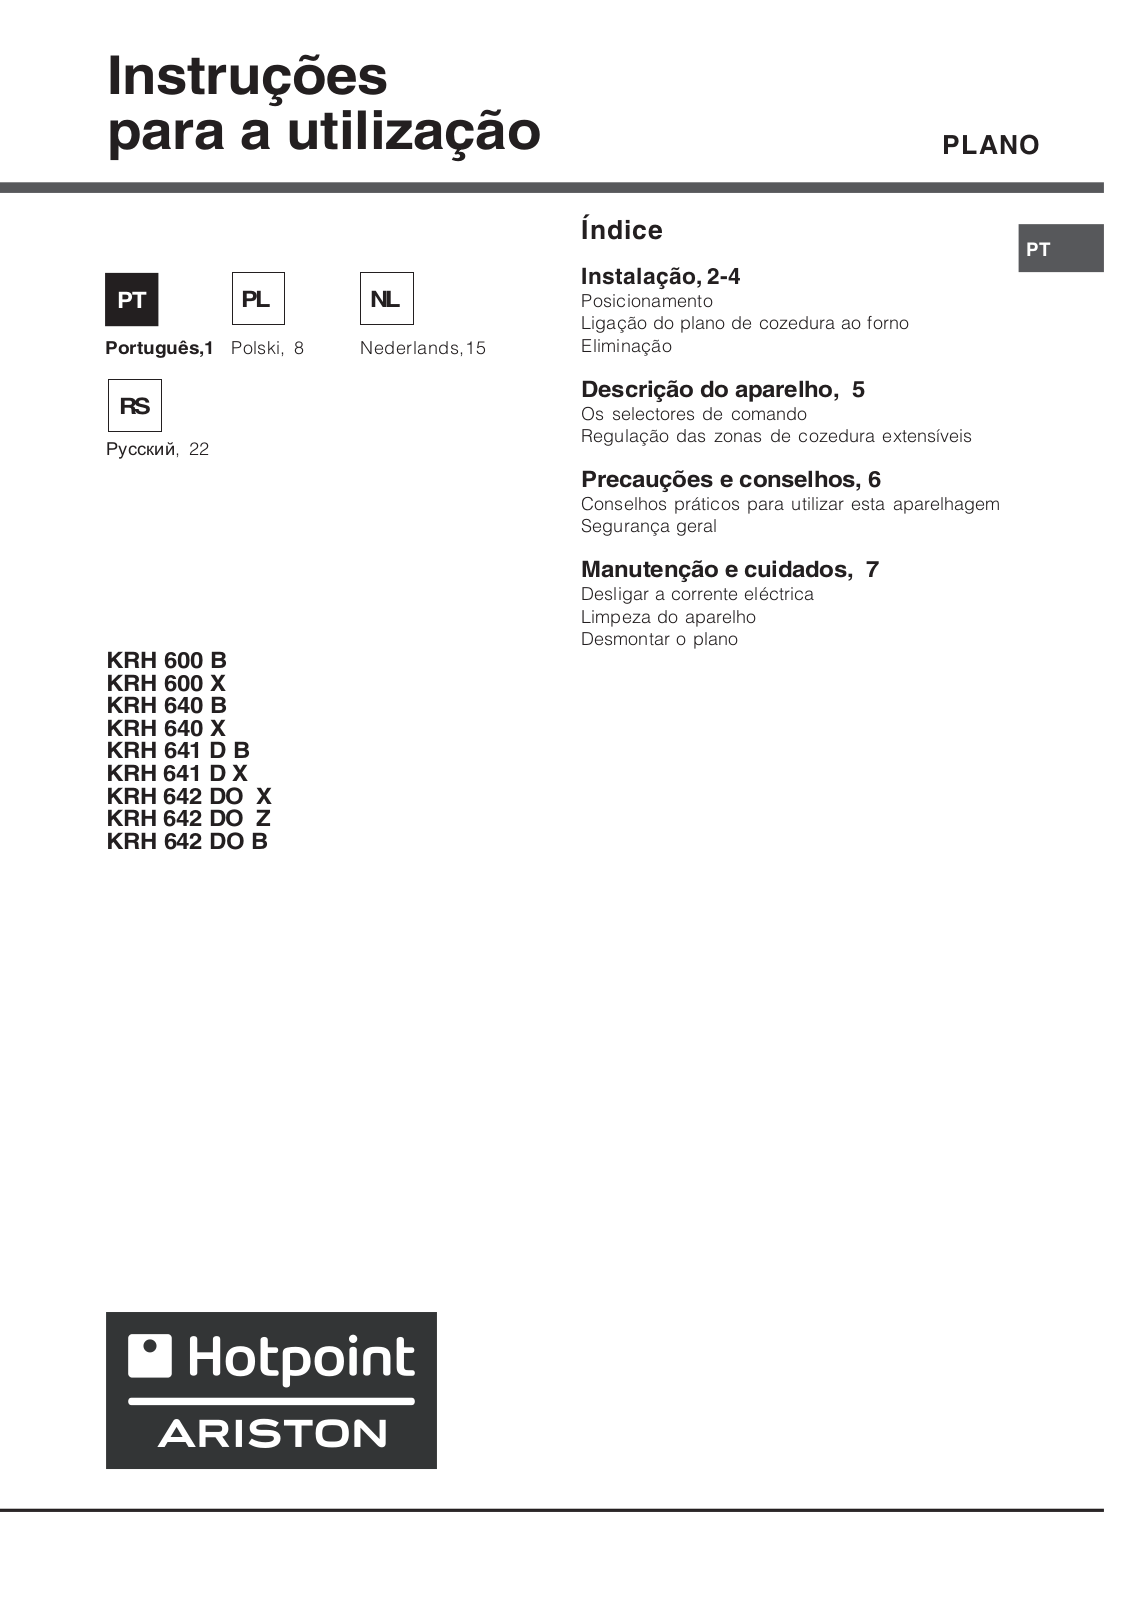 Hotpoint Ariston KRH 642 DO B, KRH 641 D X Manual